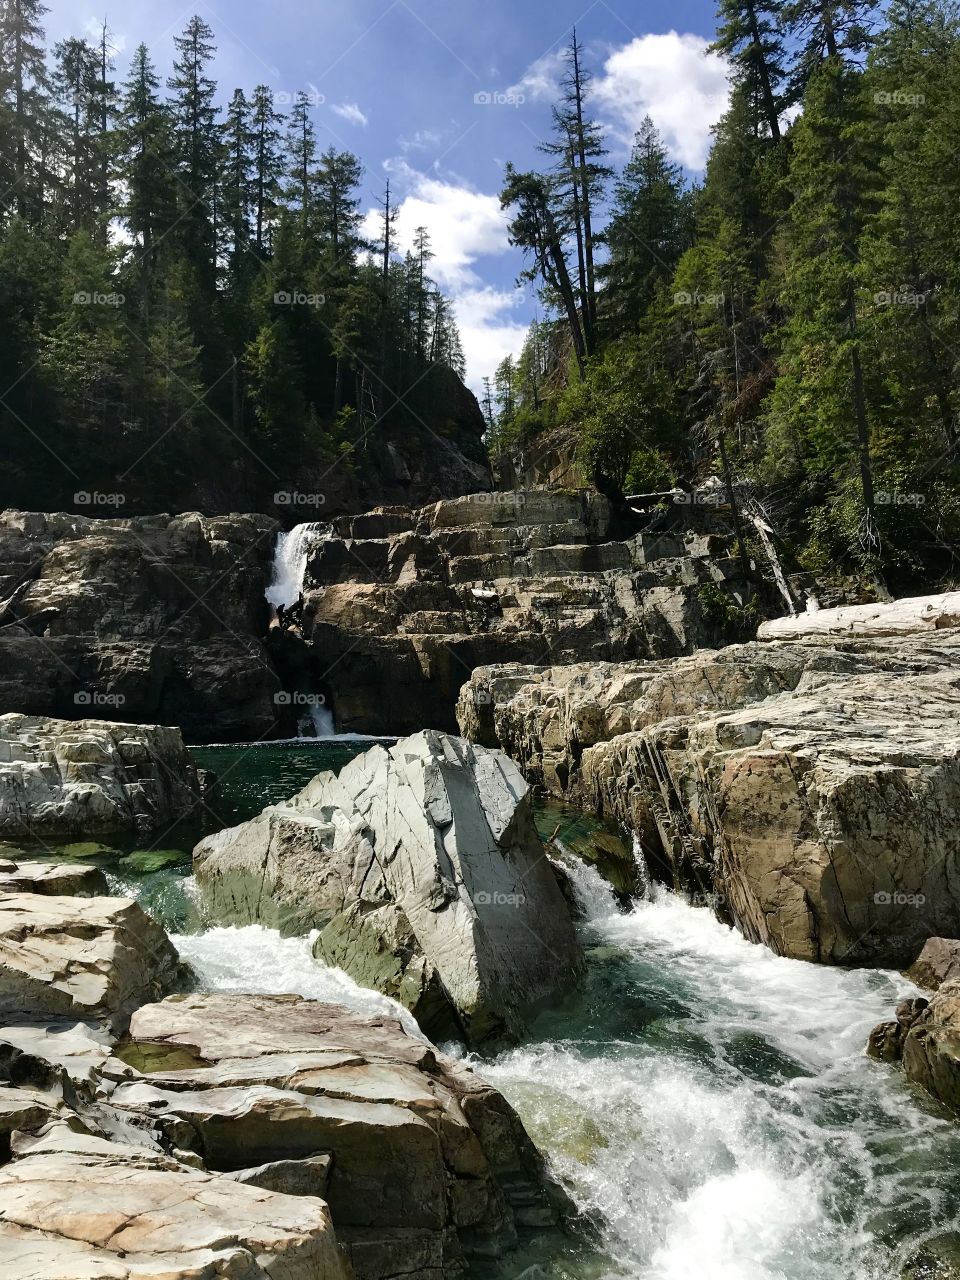 Trailing waterfall through rocks.